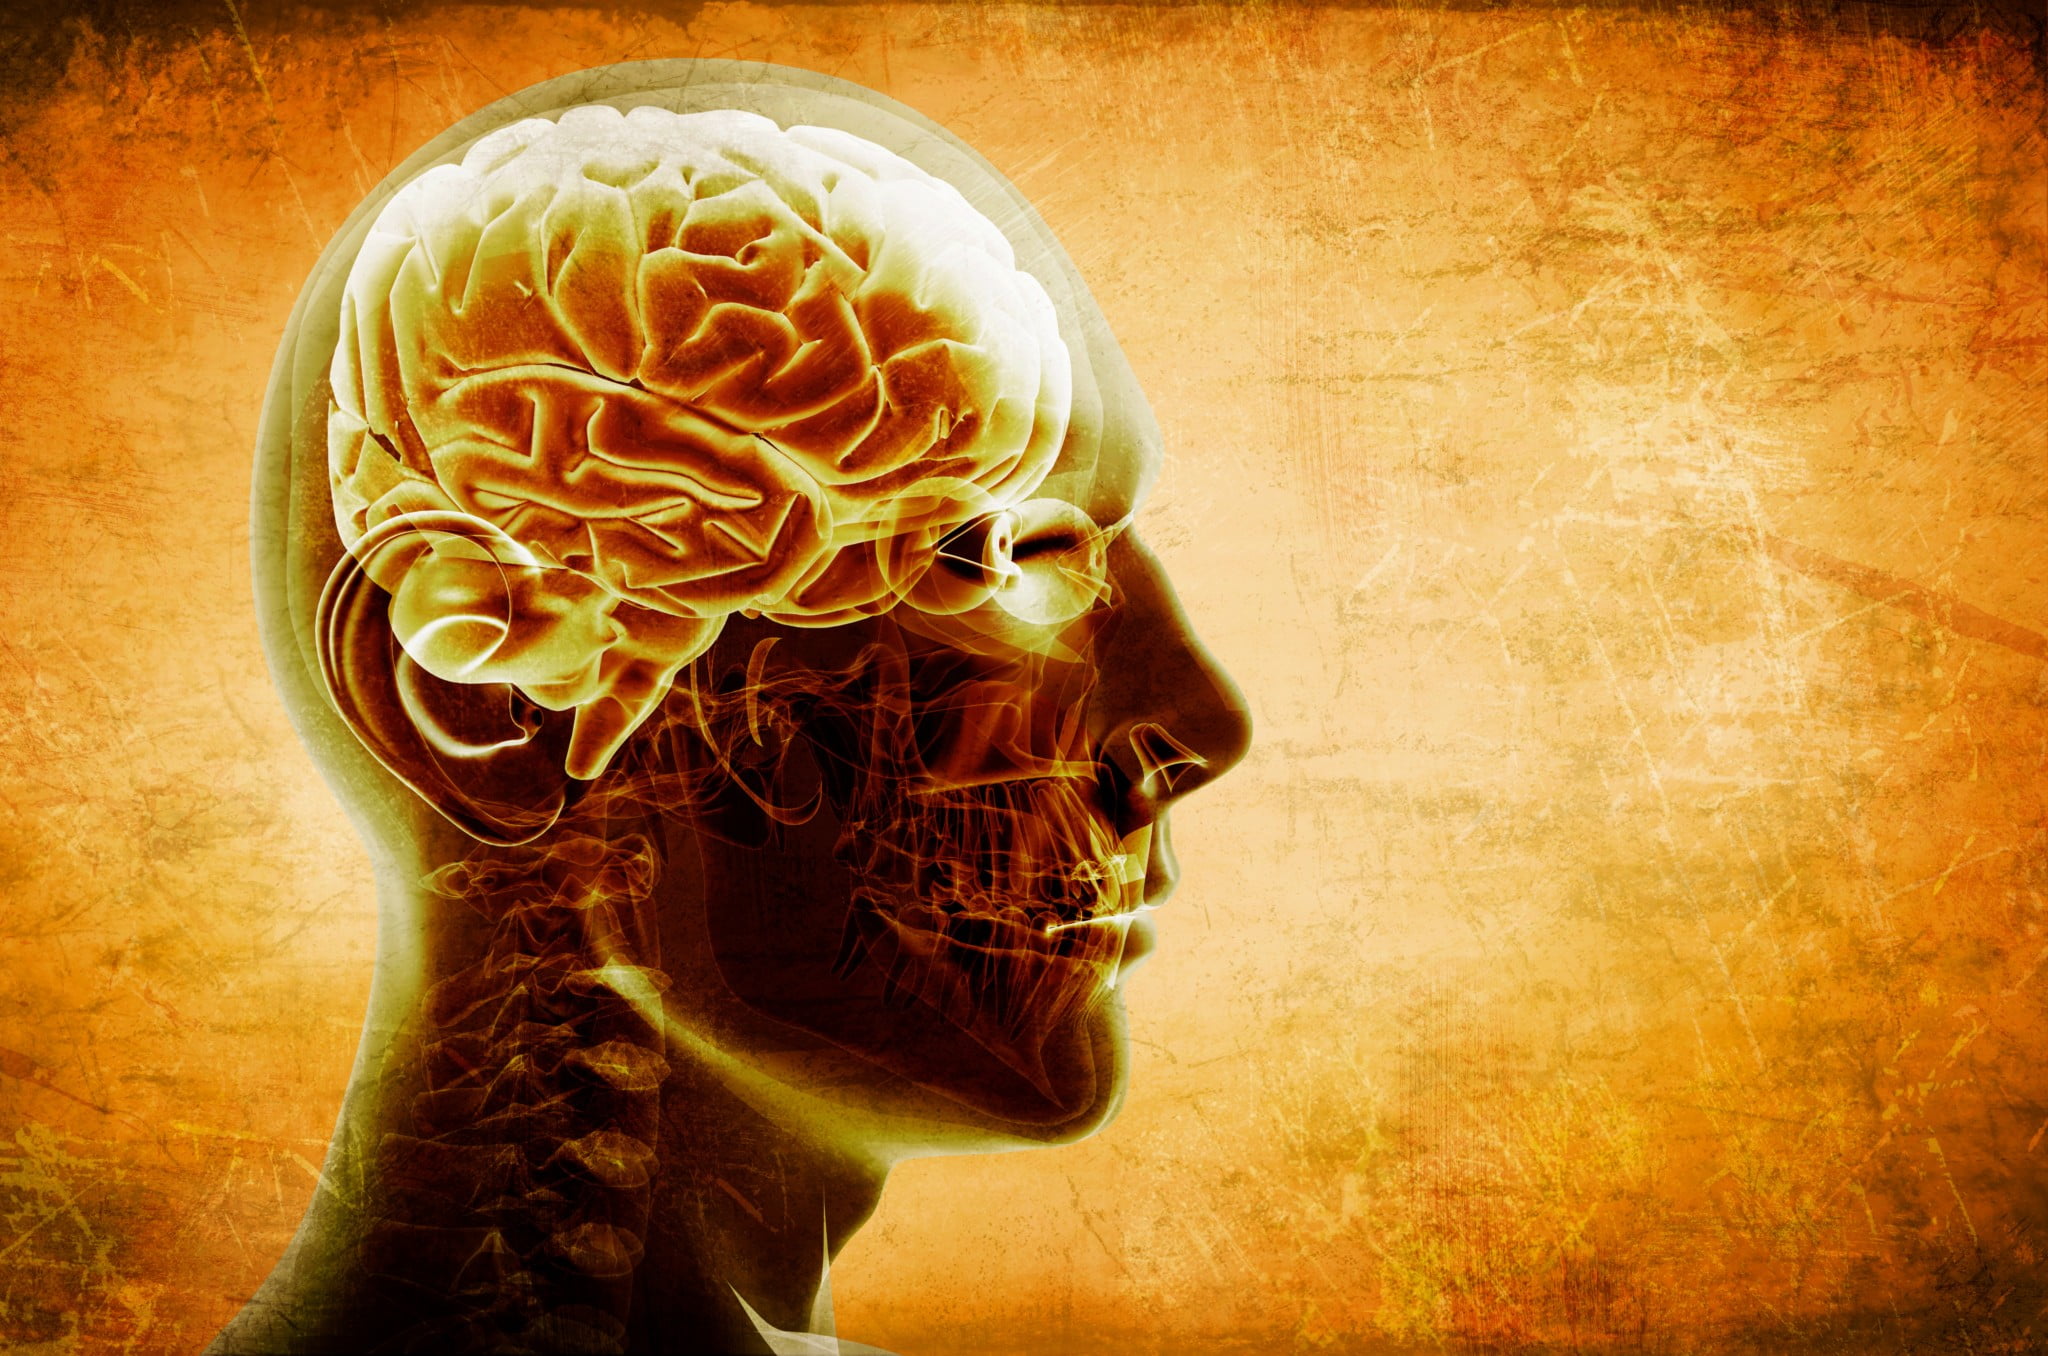 head with 3D rendering of brain in orange